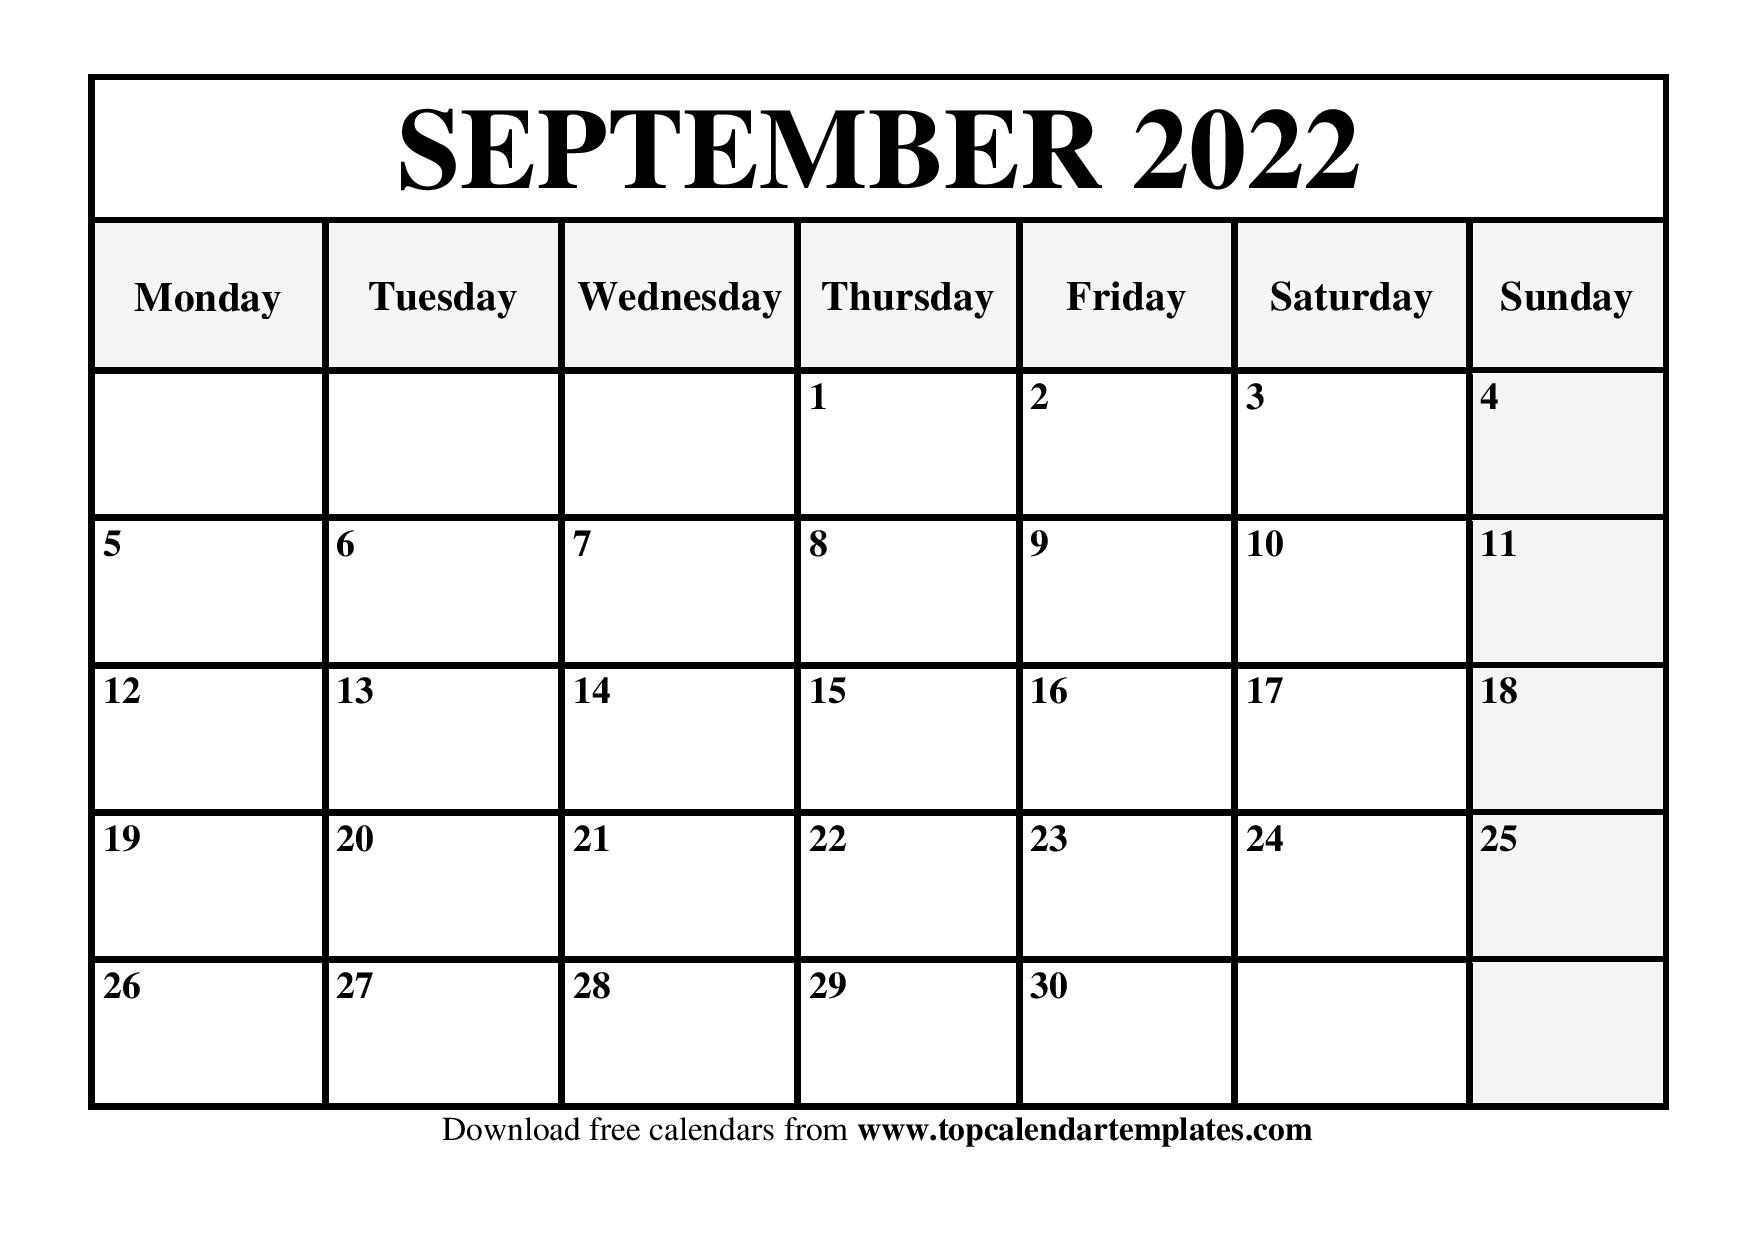 September Calendar 2022 Printable Printable Calendar September 2022 Templates - Pdf, Word, Excel